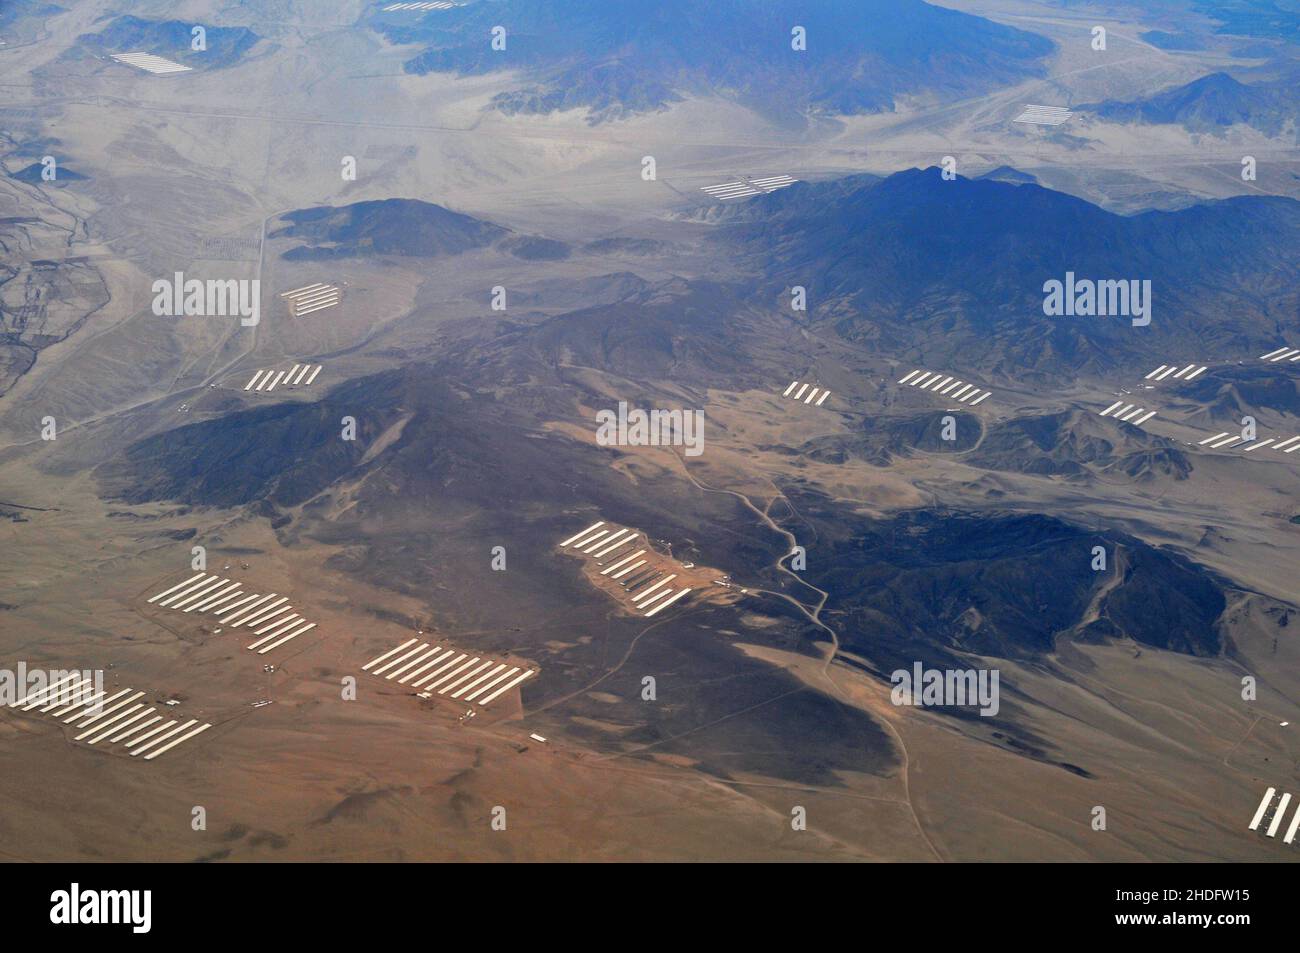 aerial view on desertic region near Lima, Peru Stock Photo